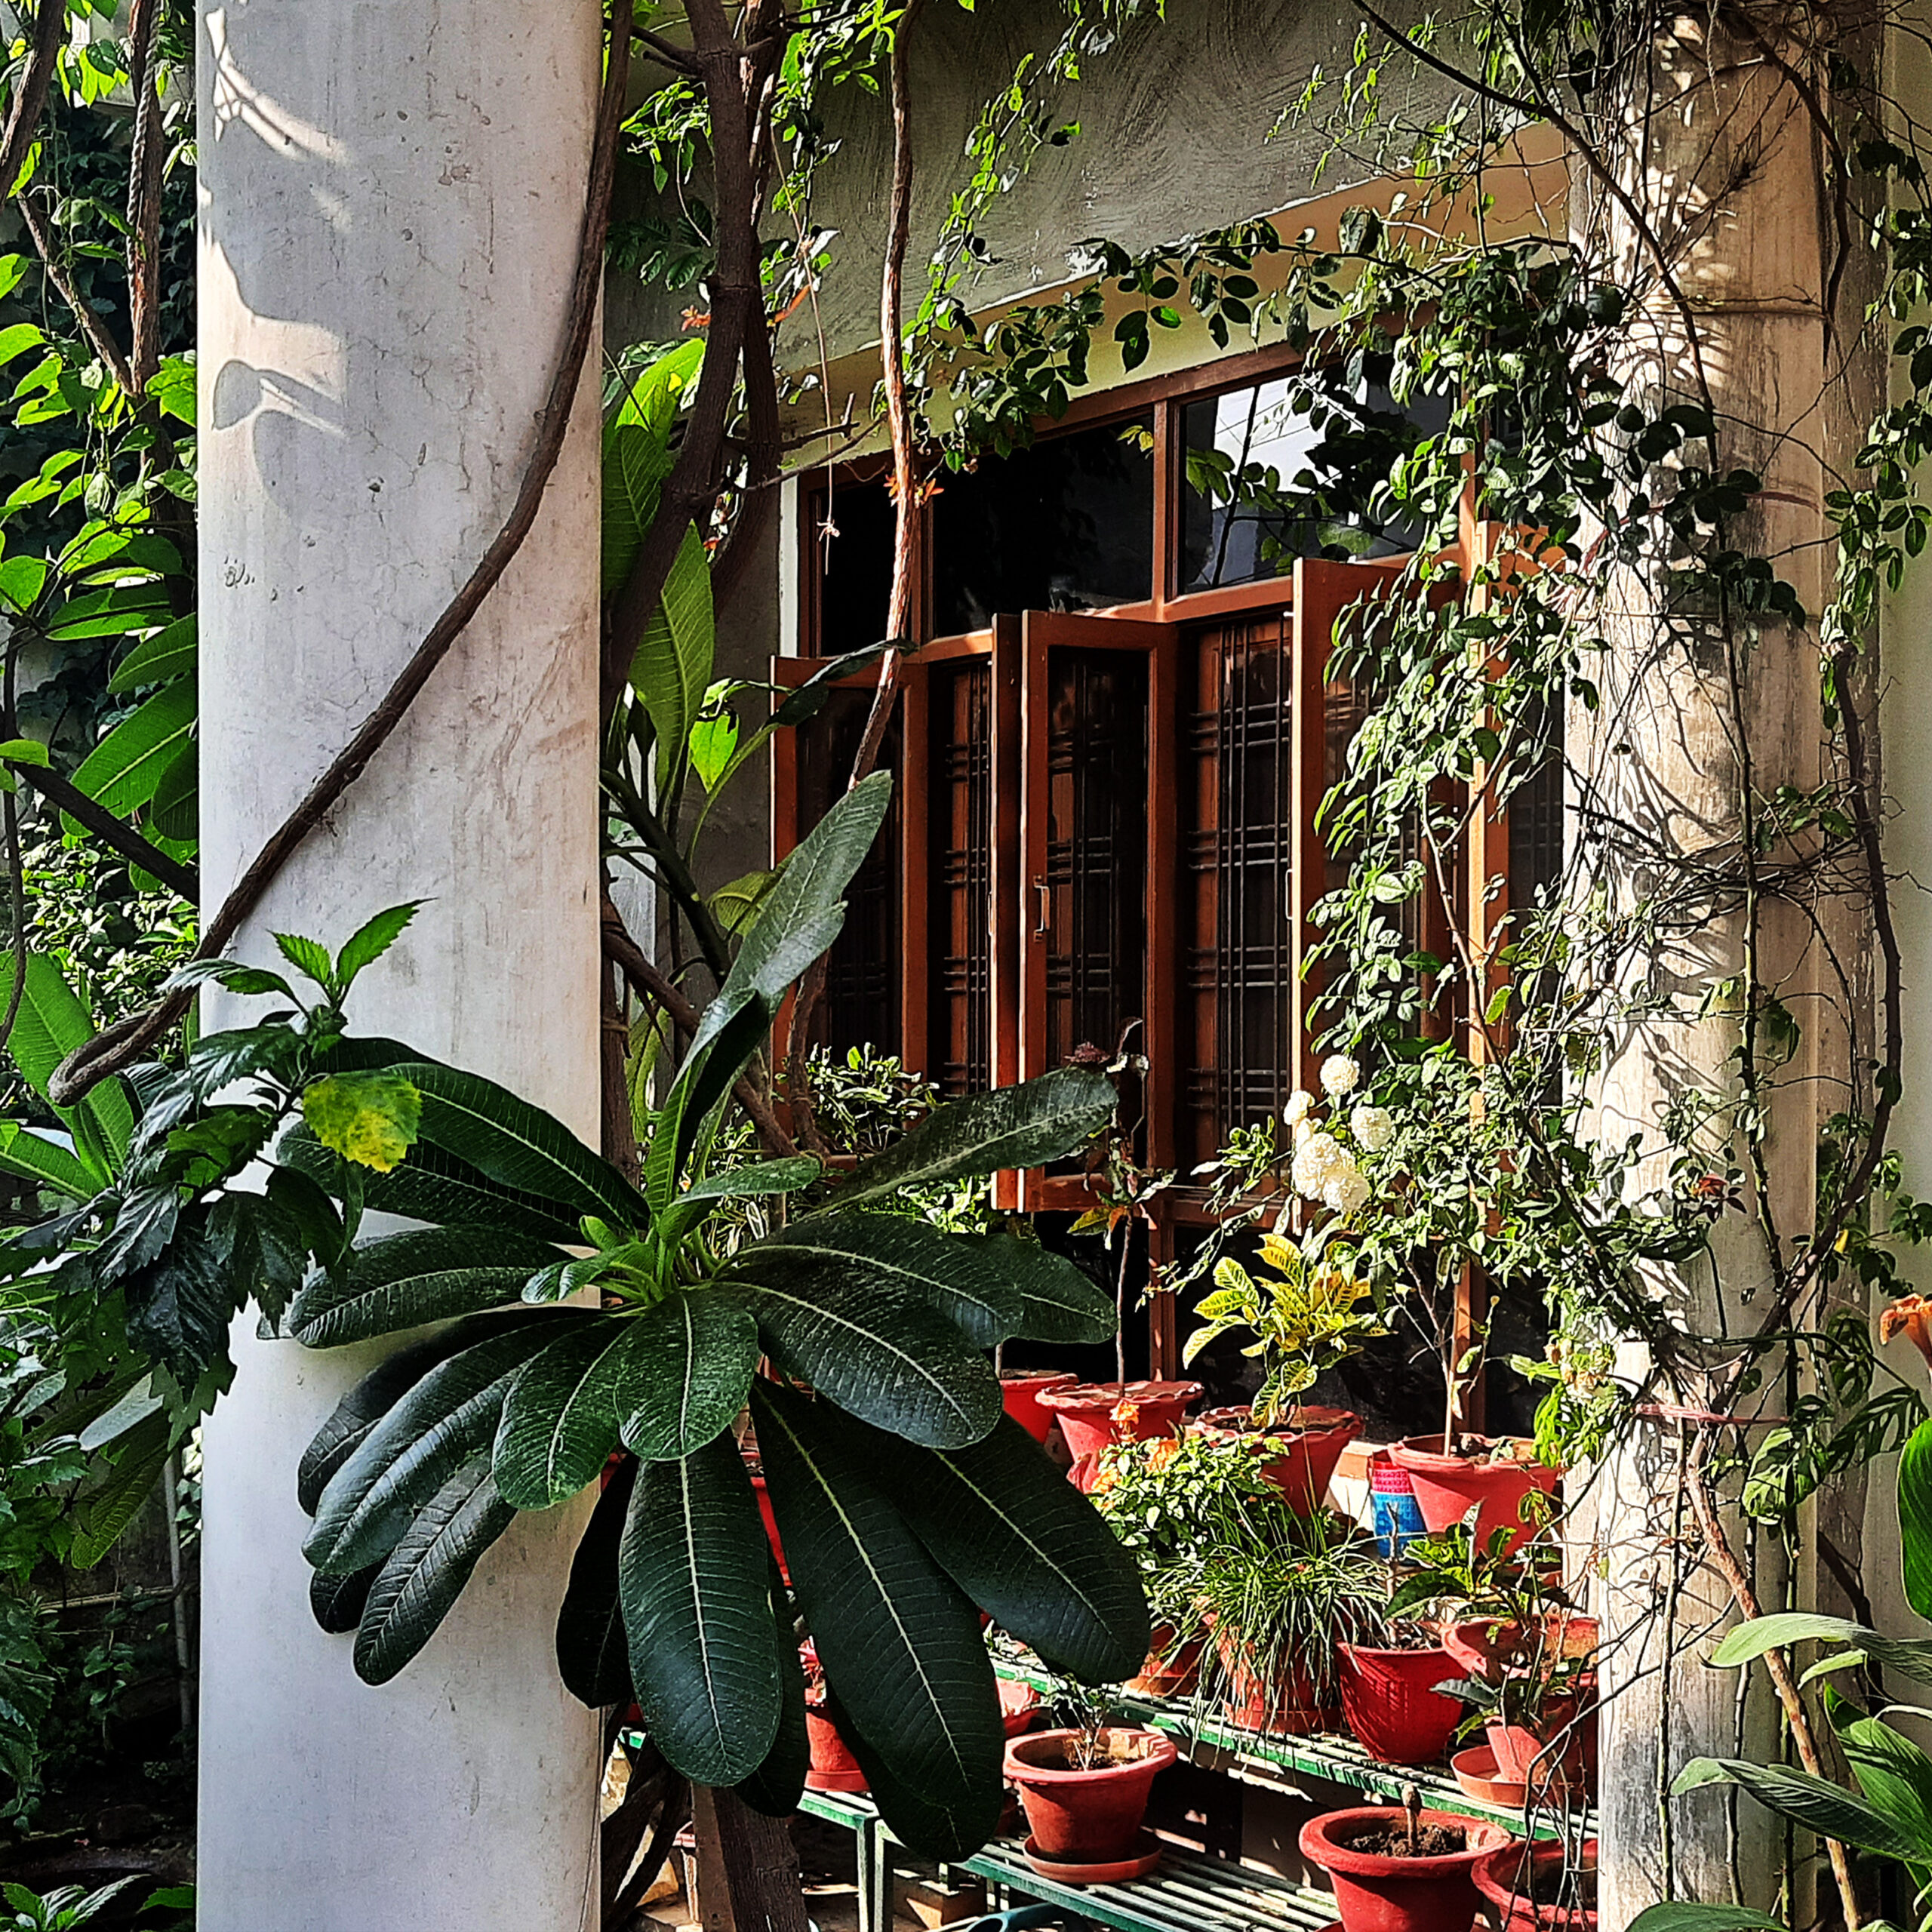 House in the Foliage, at Barabanki, Uttar Pradesh, India, by Advance Group 1